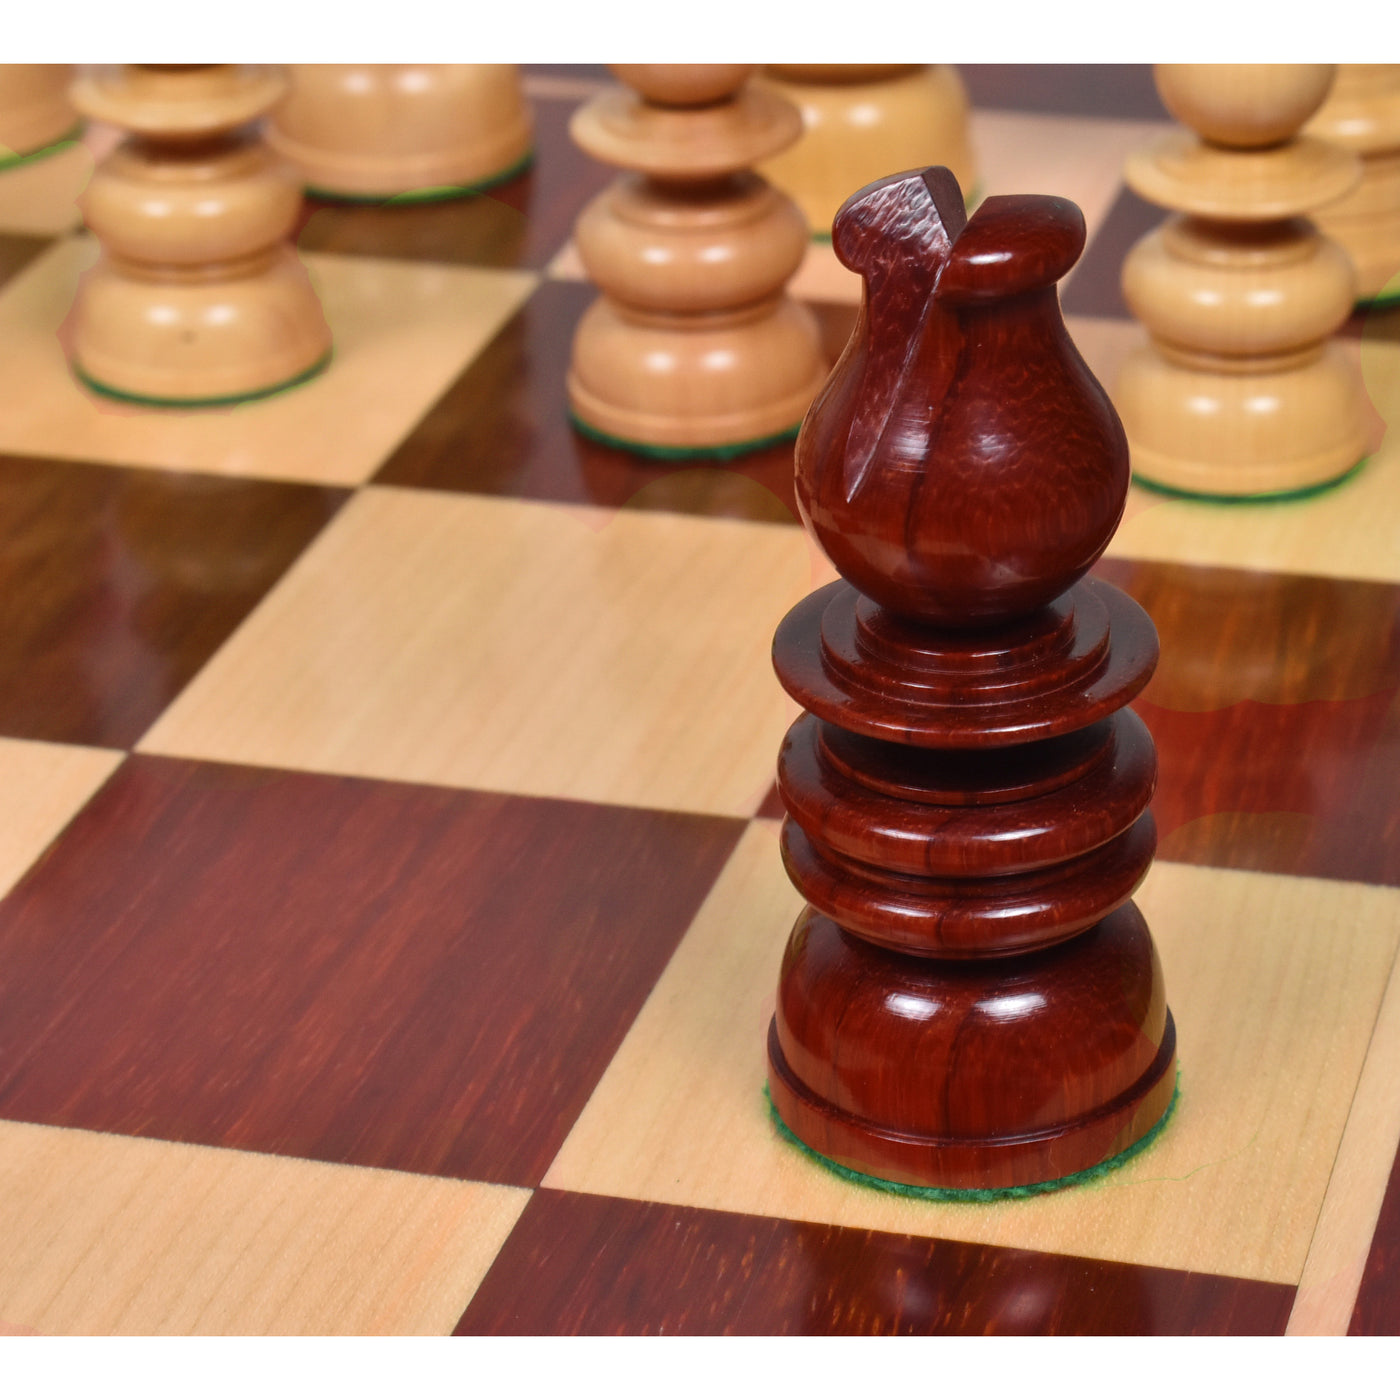 St. George Pre-Staunton Calvert Chess Pieces Only set 